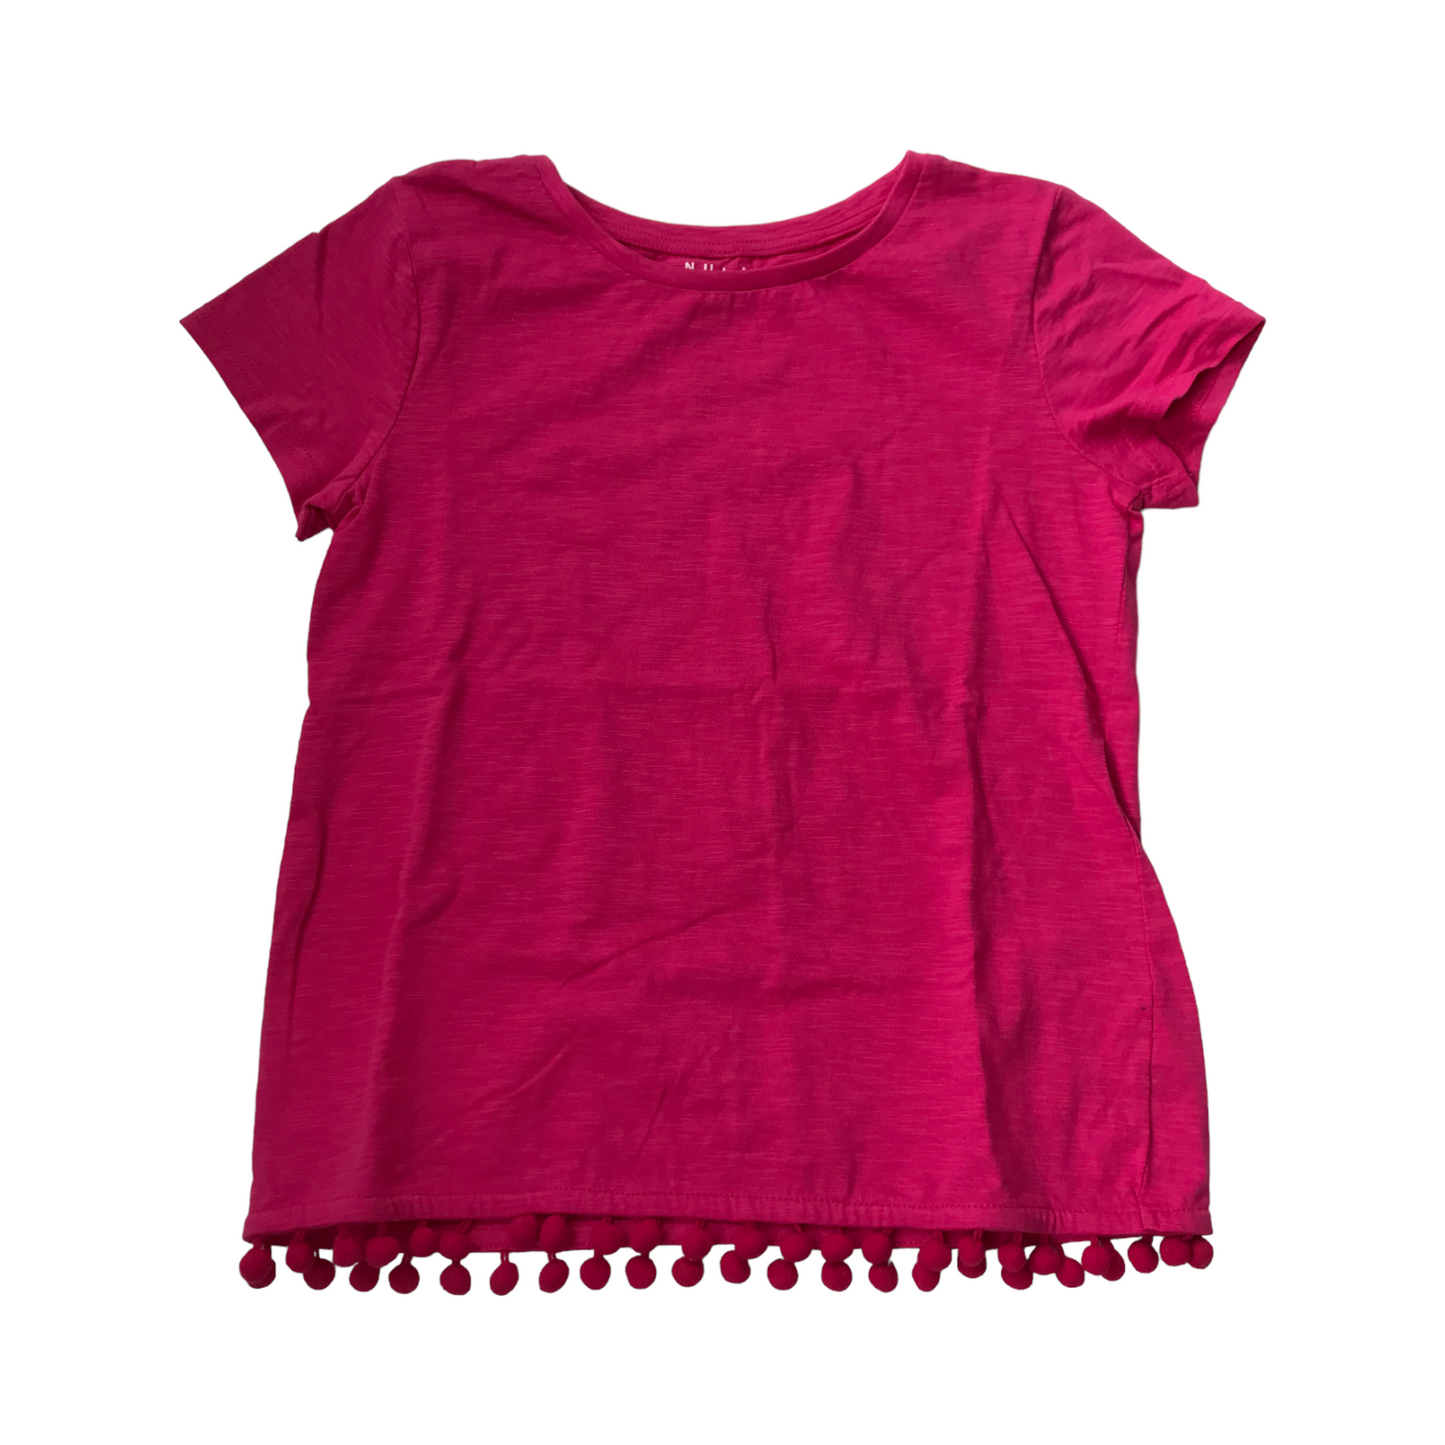 Nutmeg Pink Bauble T-shirt Age 11